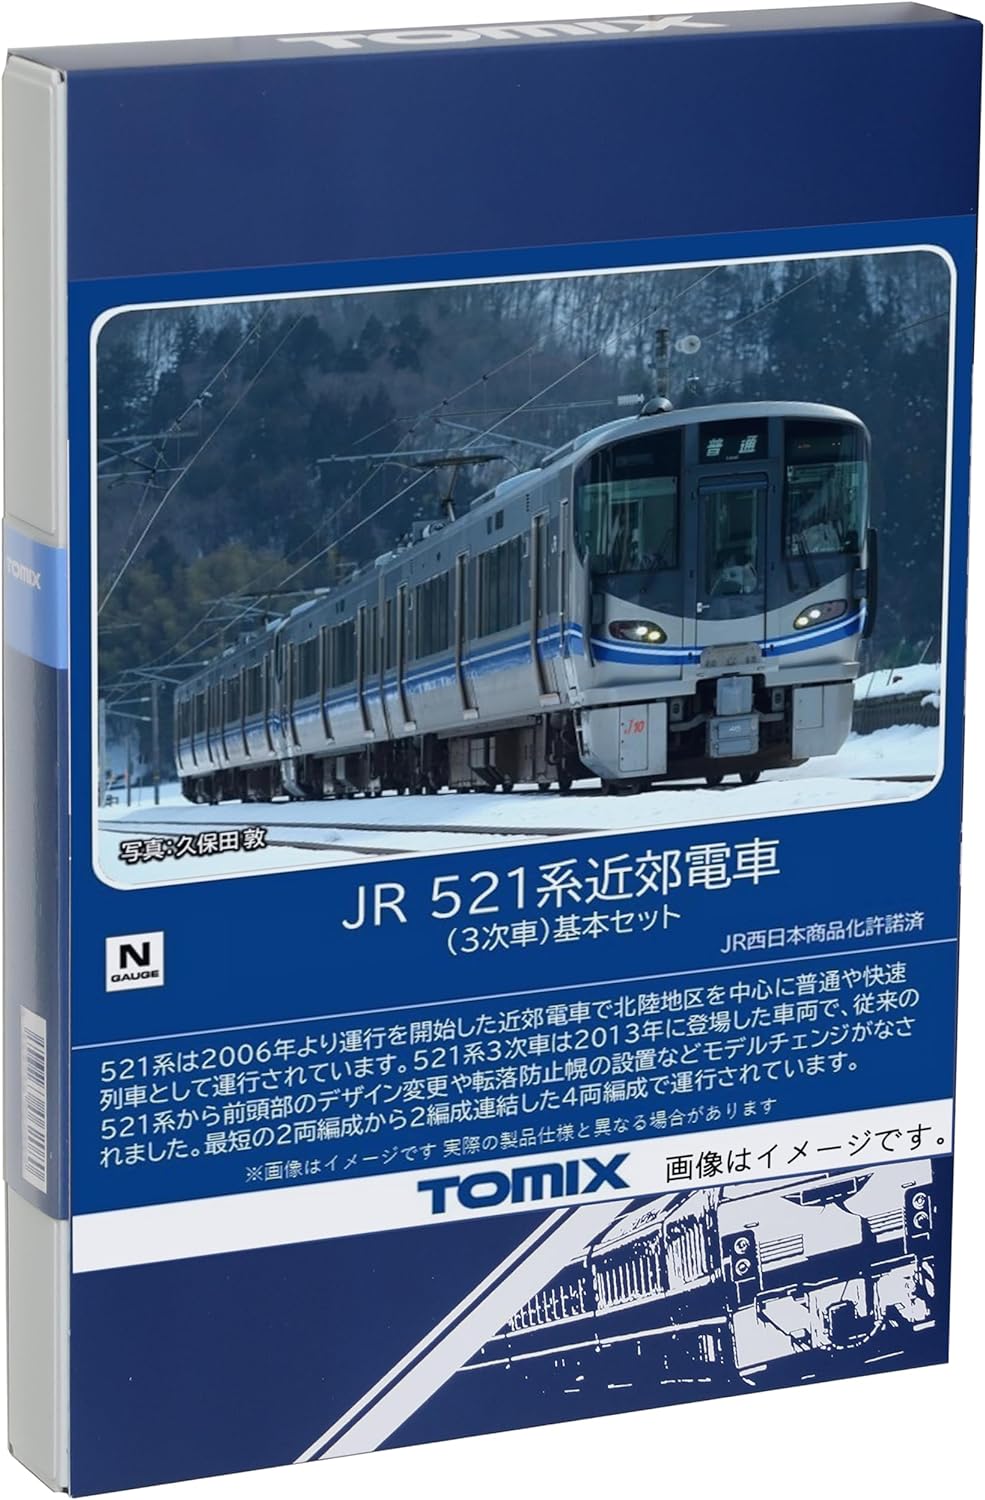 TOMIX 98131 N Gauge JR 521 Series 3rd Car Basic Set Railway Model Train - BanzaiHobby